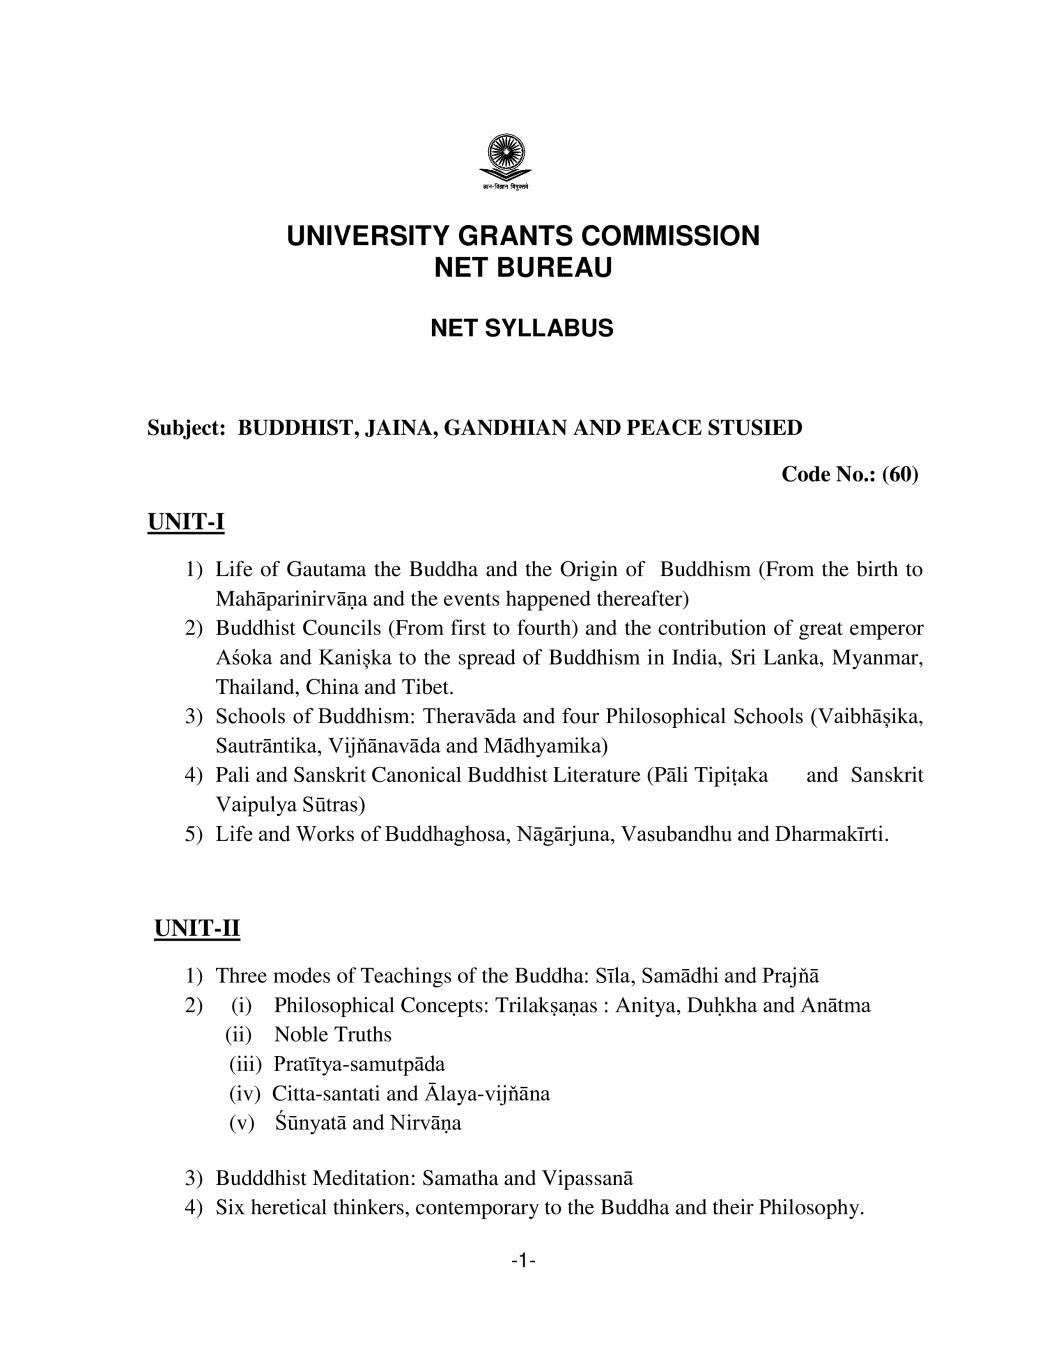 UGC NET Syllabus for	Buddhist, Jaina, Gandhian and Peace Studies 2020 - Page 1